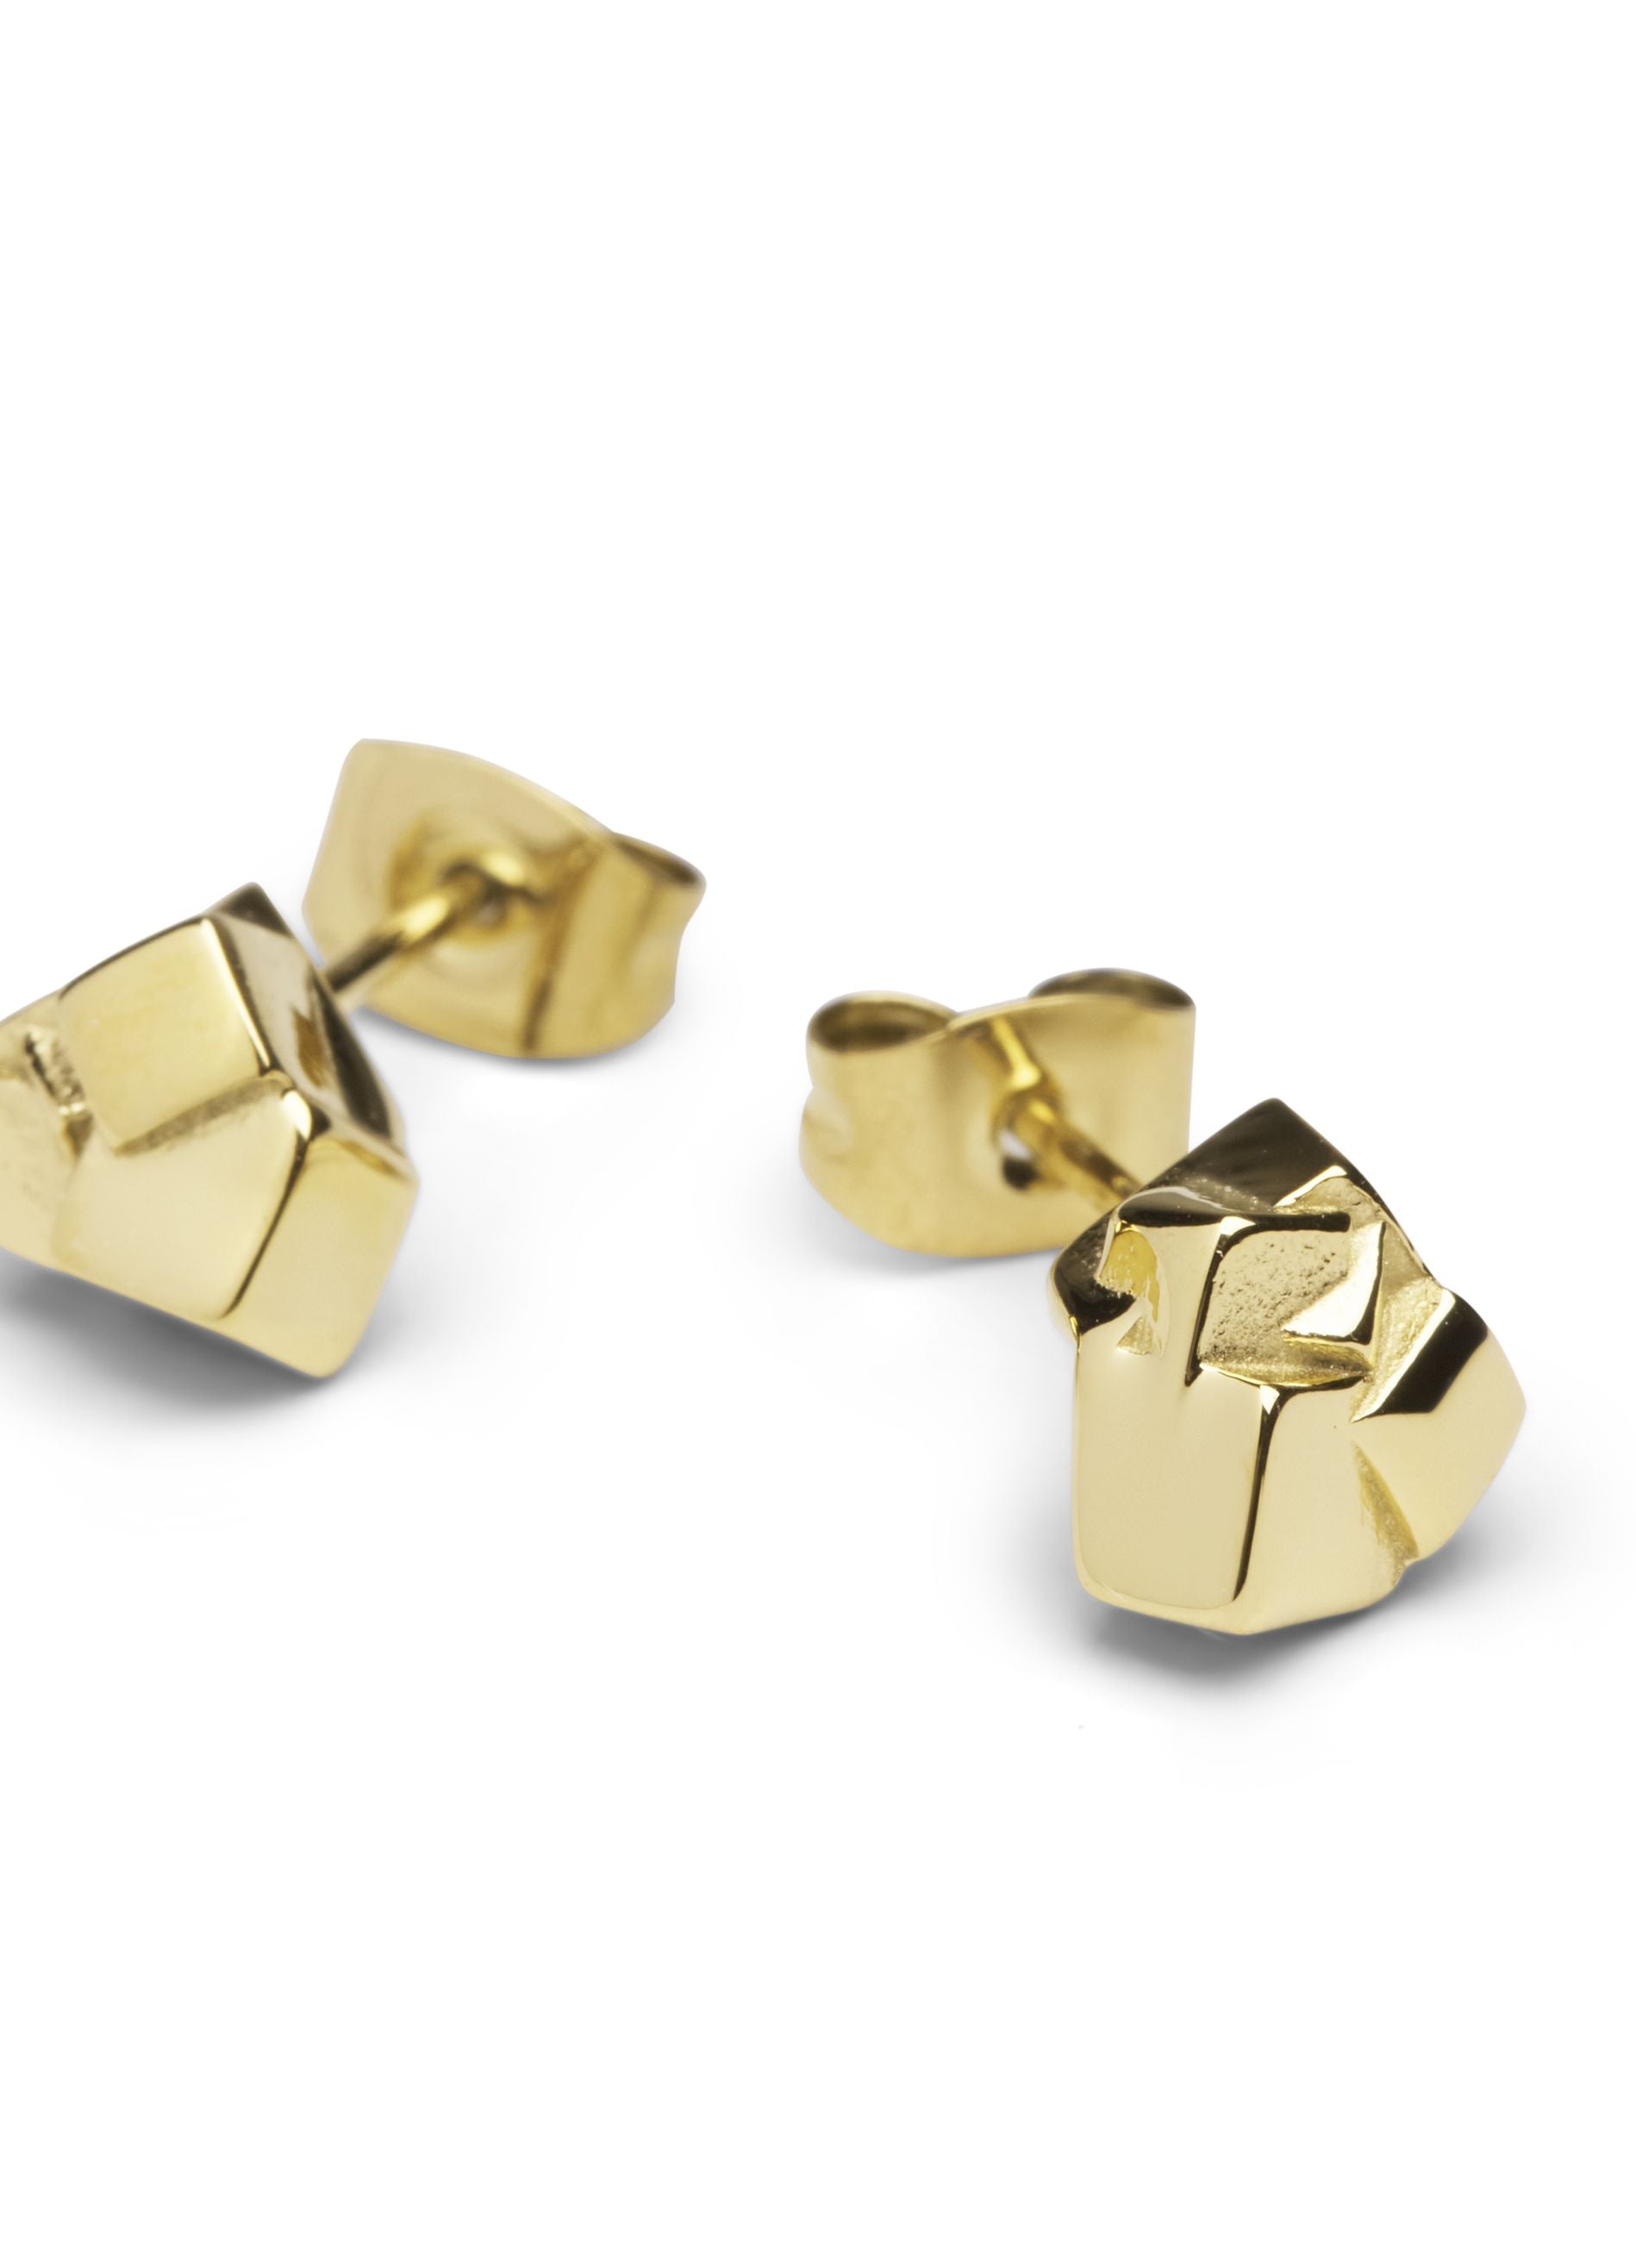 Skultuna Morph Mini Earrings, Gold Plated